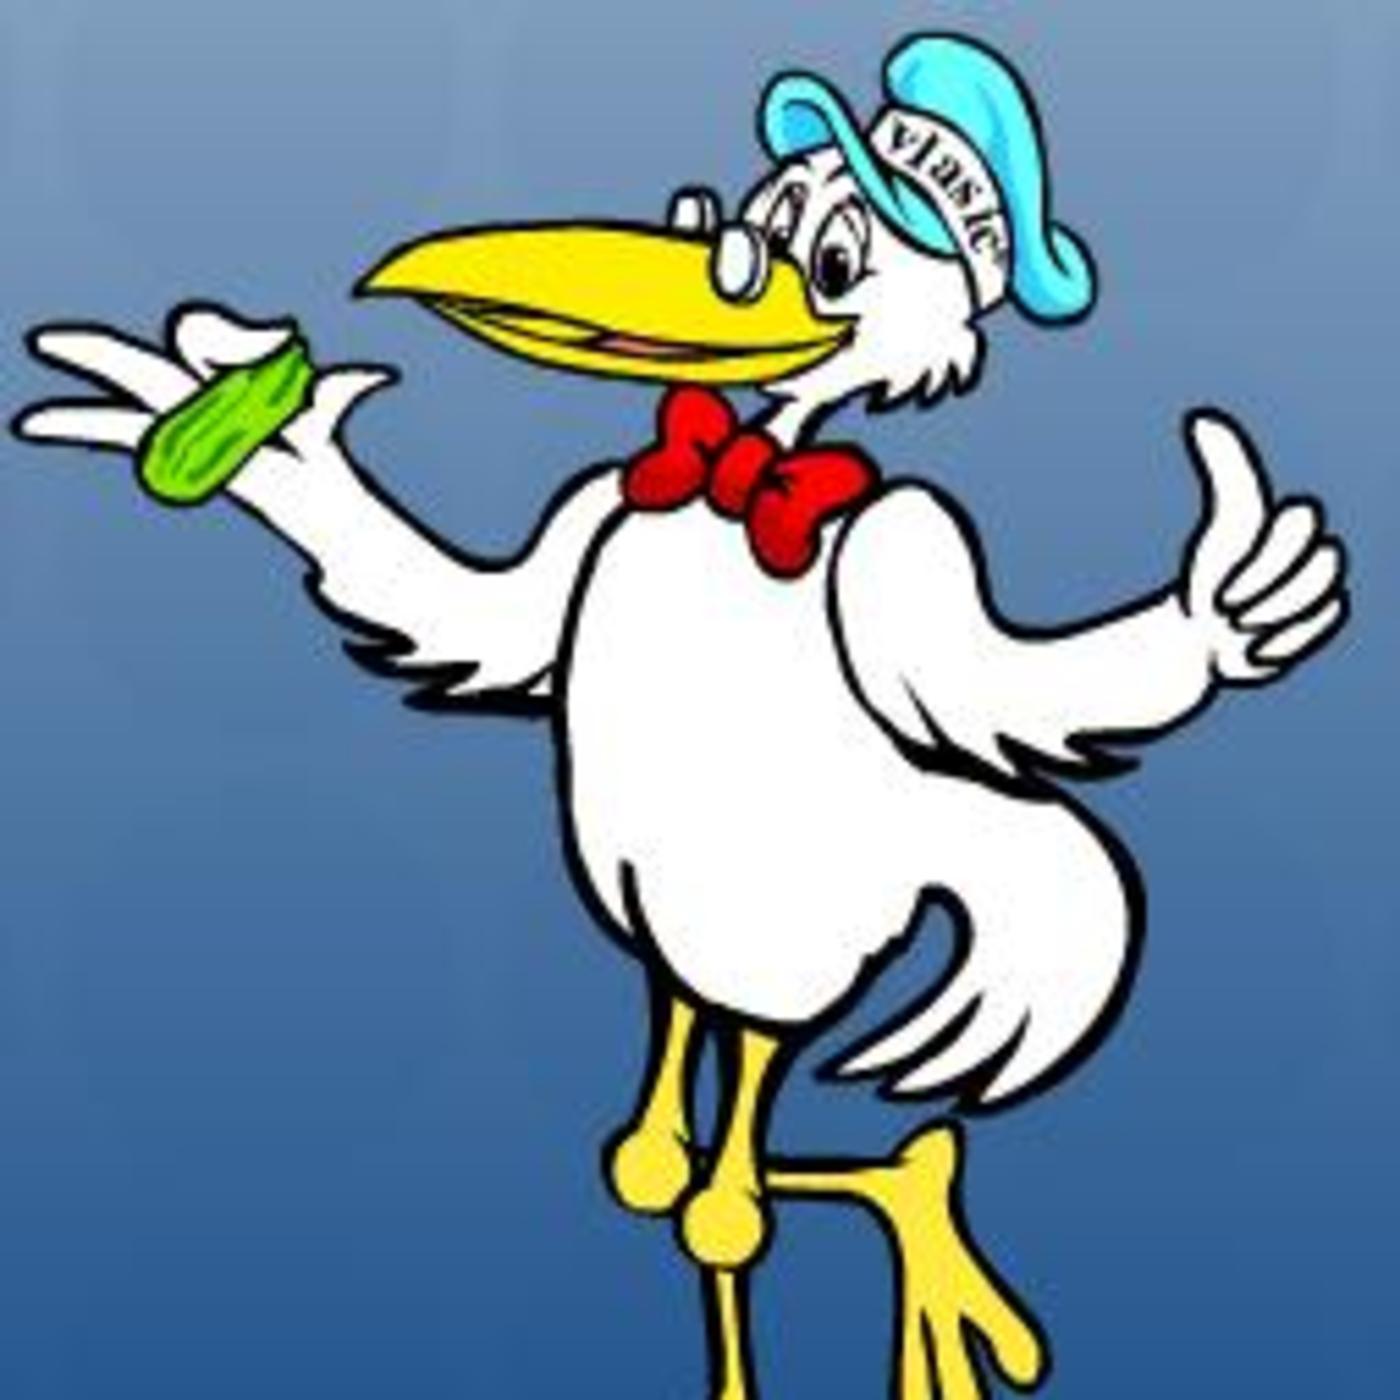 Episode 23 - The Vlasic Stork